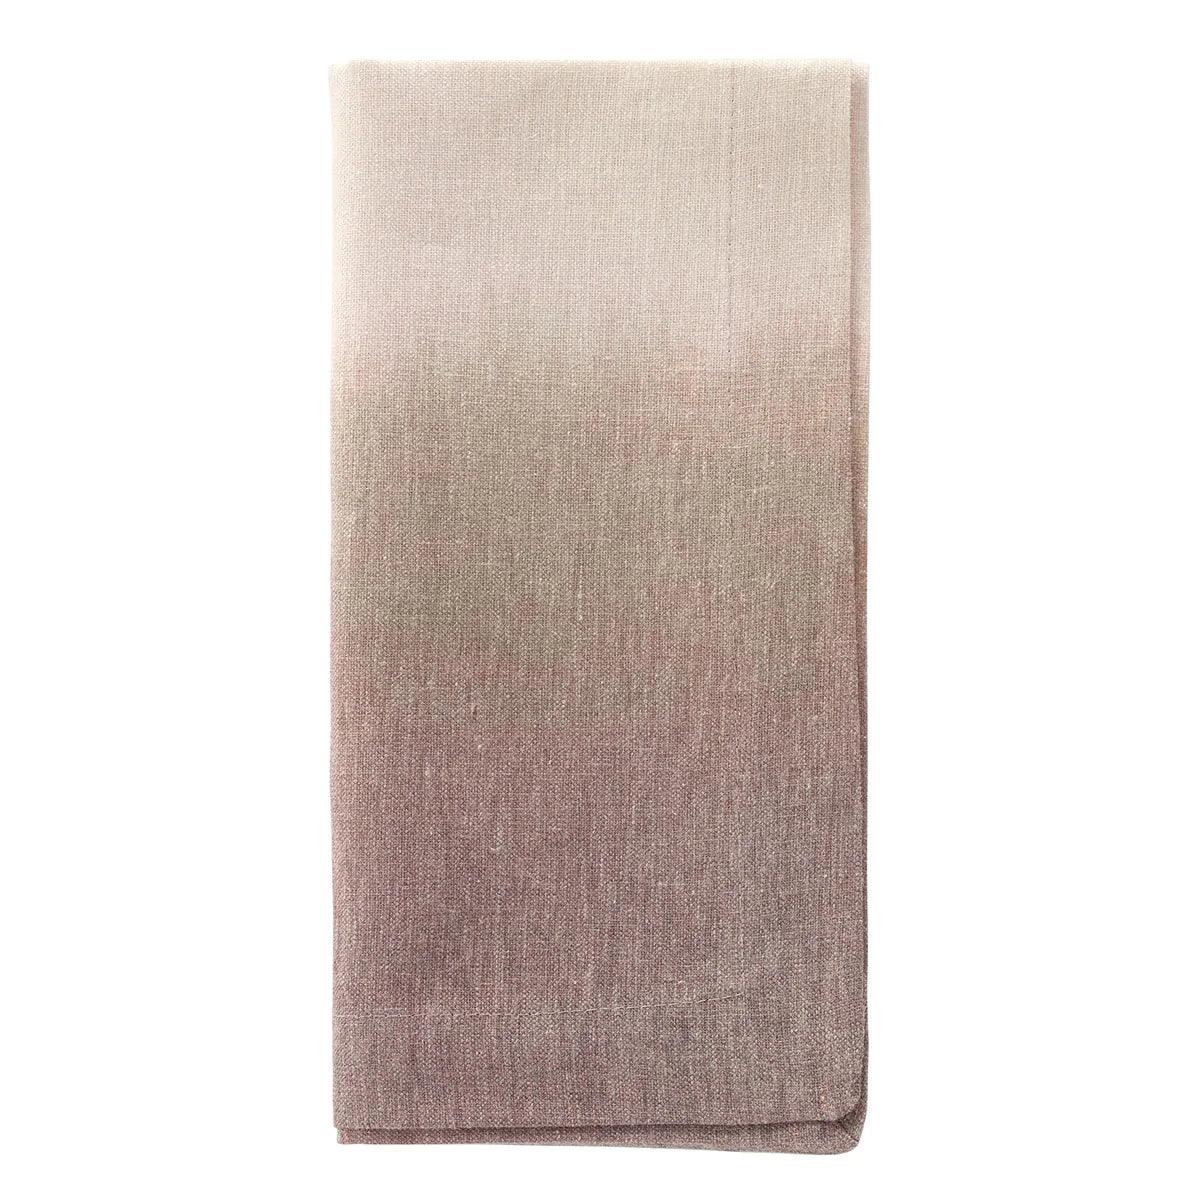 Ombre Napkin - Elegant Linen